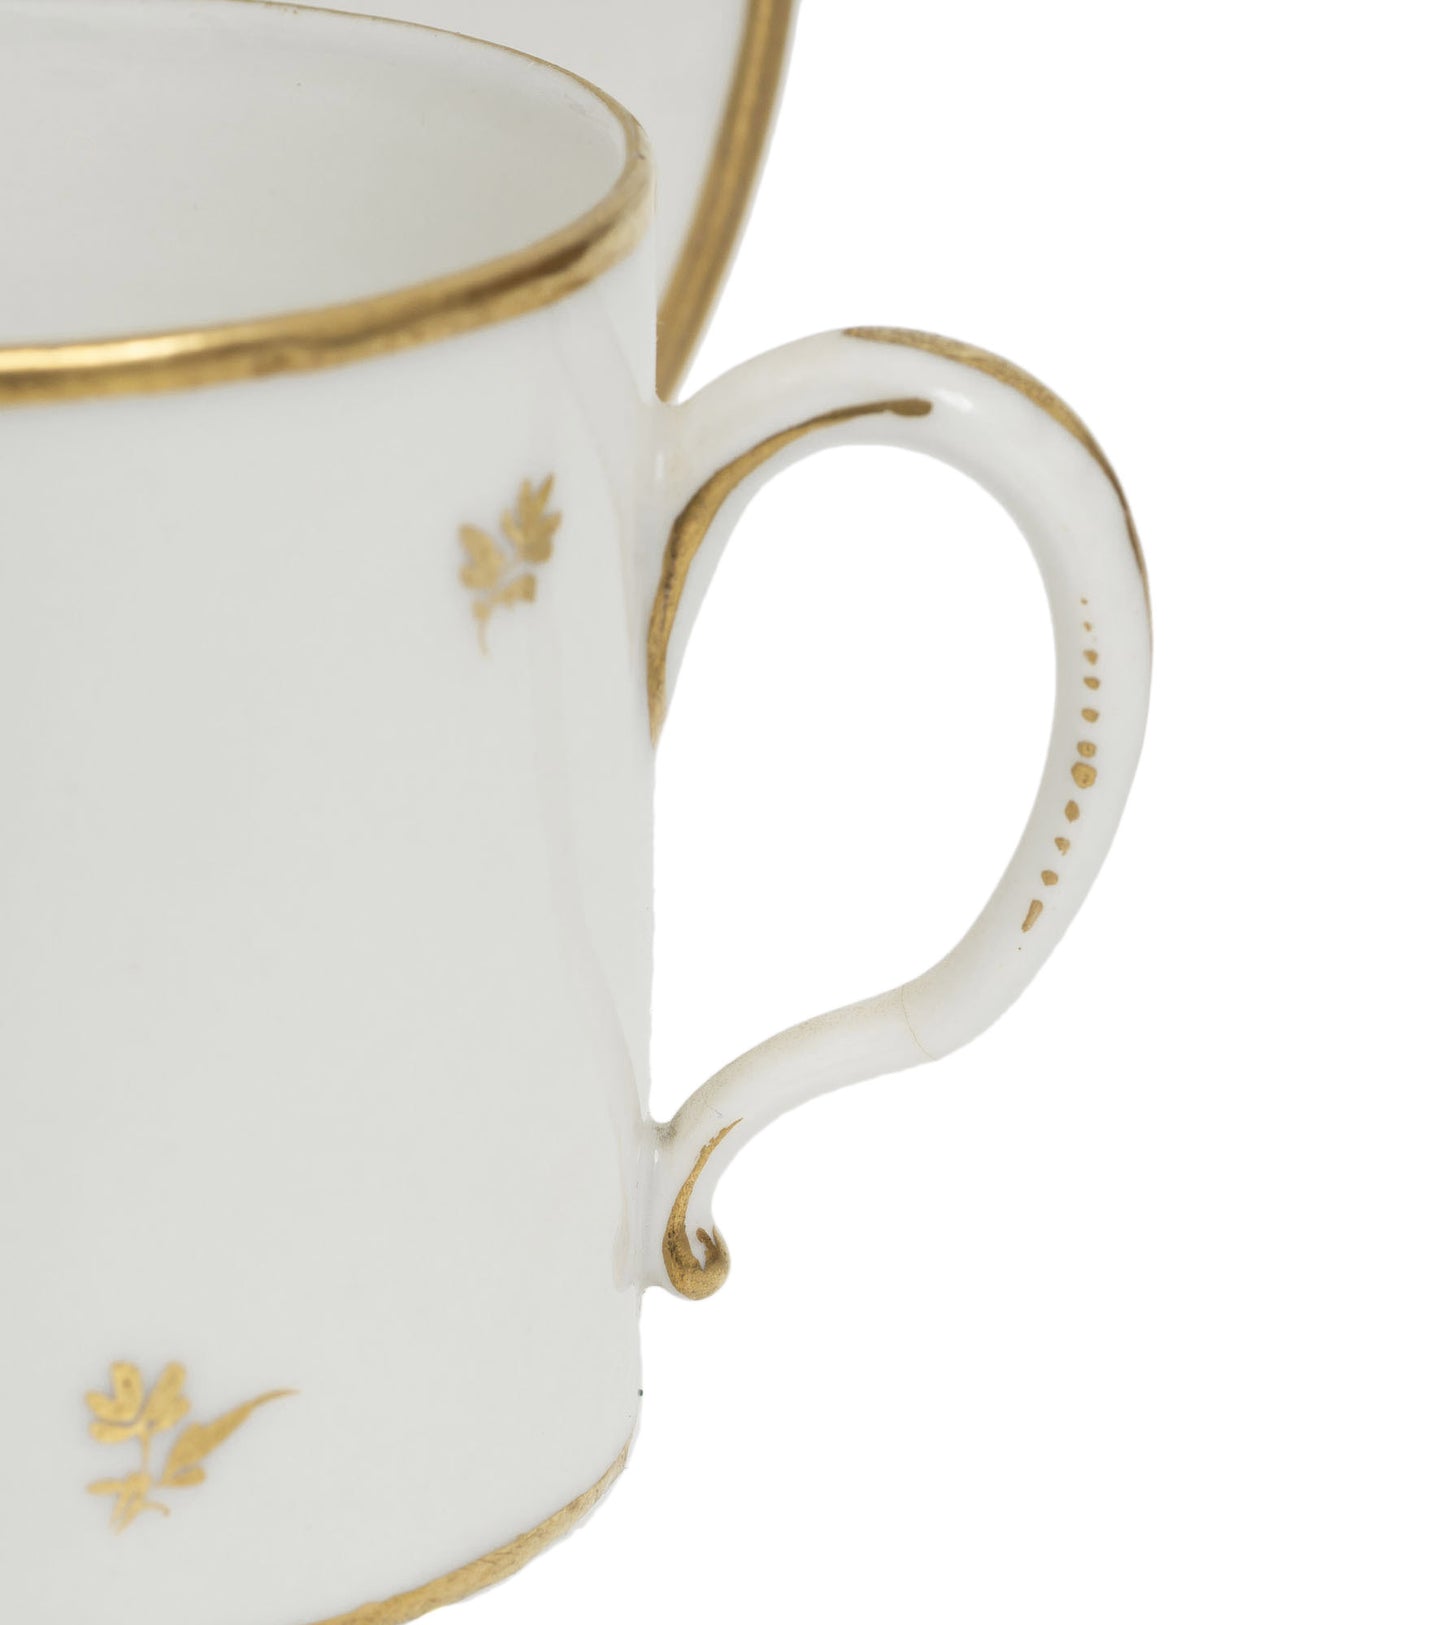 Antique Amstel Porcelain Cup & Saucer Hand Painted Birds & Gilt Work c1800 (Code 2884)